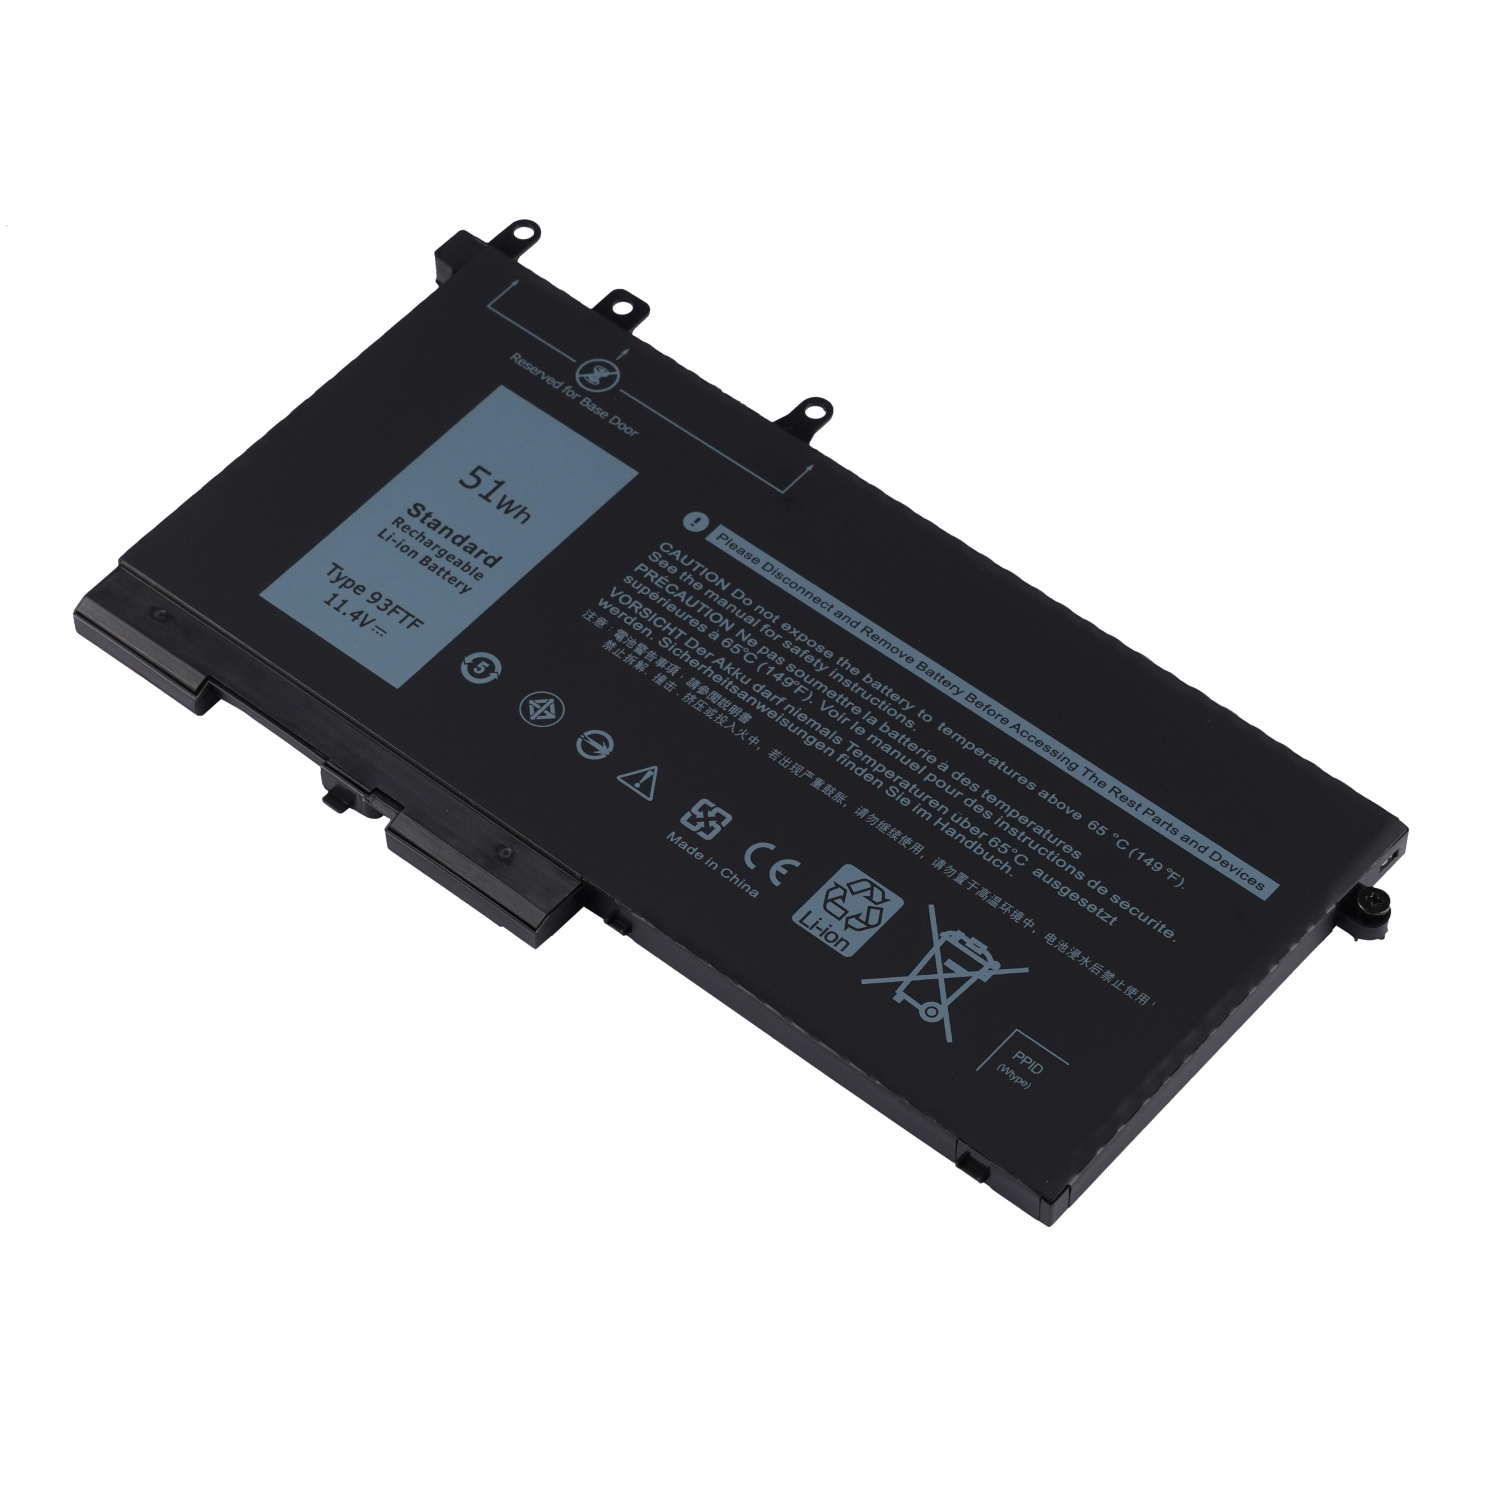 93FTF Laptop Battery notebook battery for Dell Precision 15 3520 3530 Latitude E5280 E5480 E5580 E5490 E5590 E5480 E5290 E5591 Series